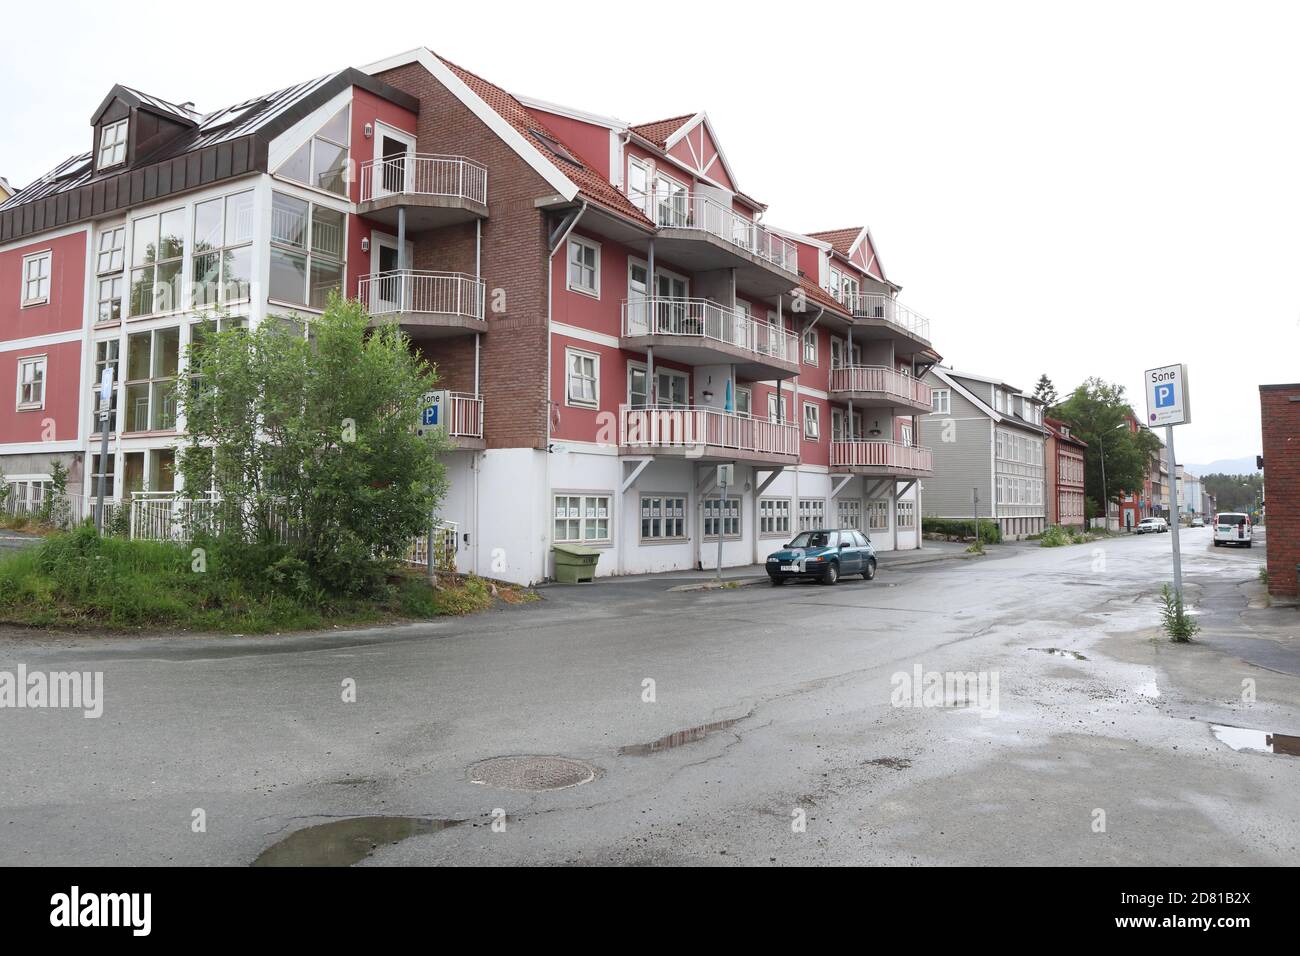 Narvik, / Norway - June 23 2019: Residential houses in Narvik, Norway Stock Photo